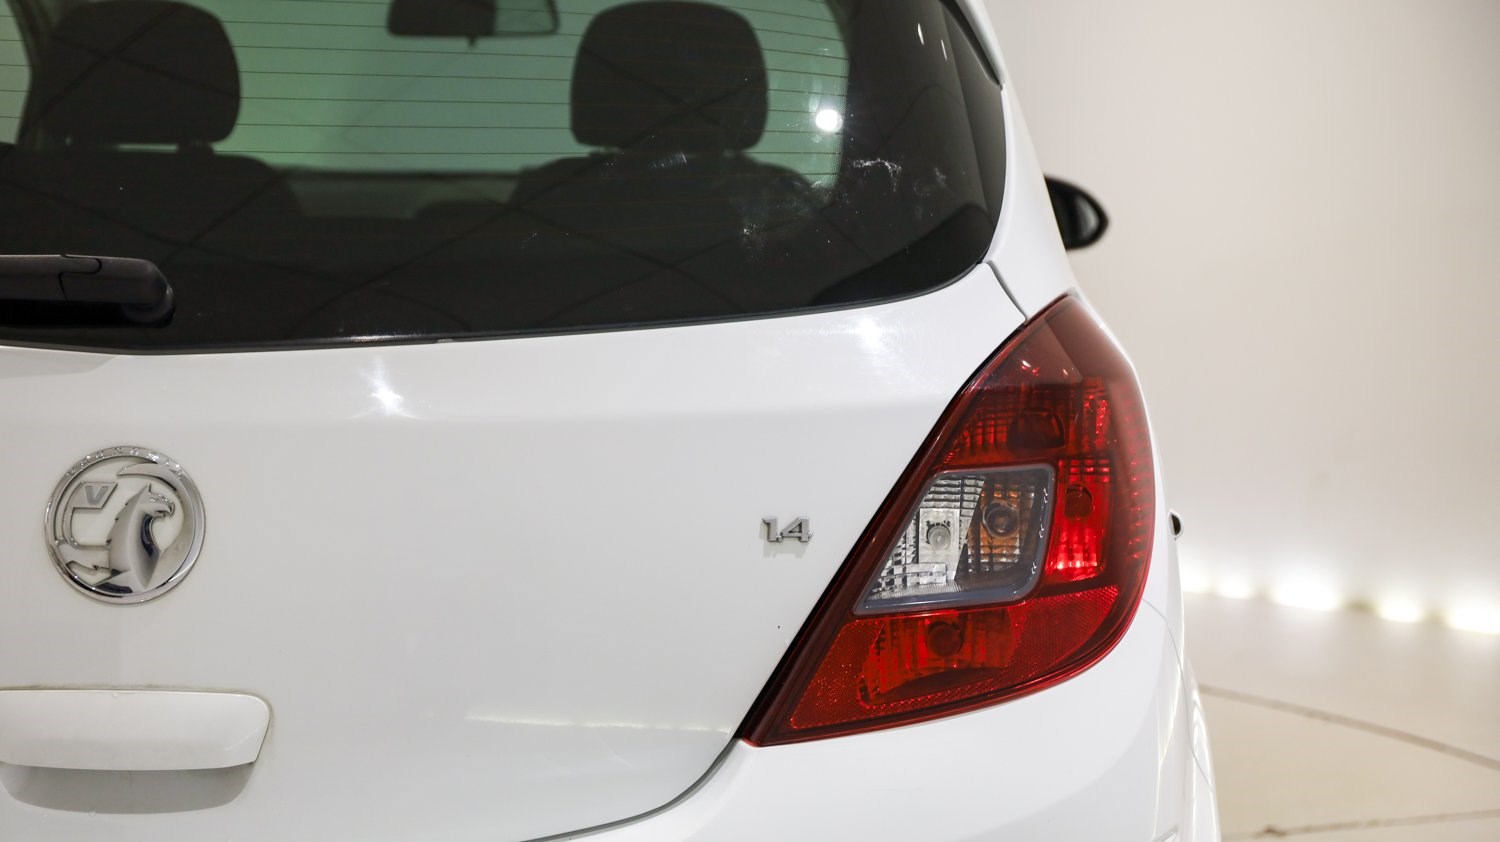 Vauxhall Corsa Listing Image